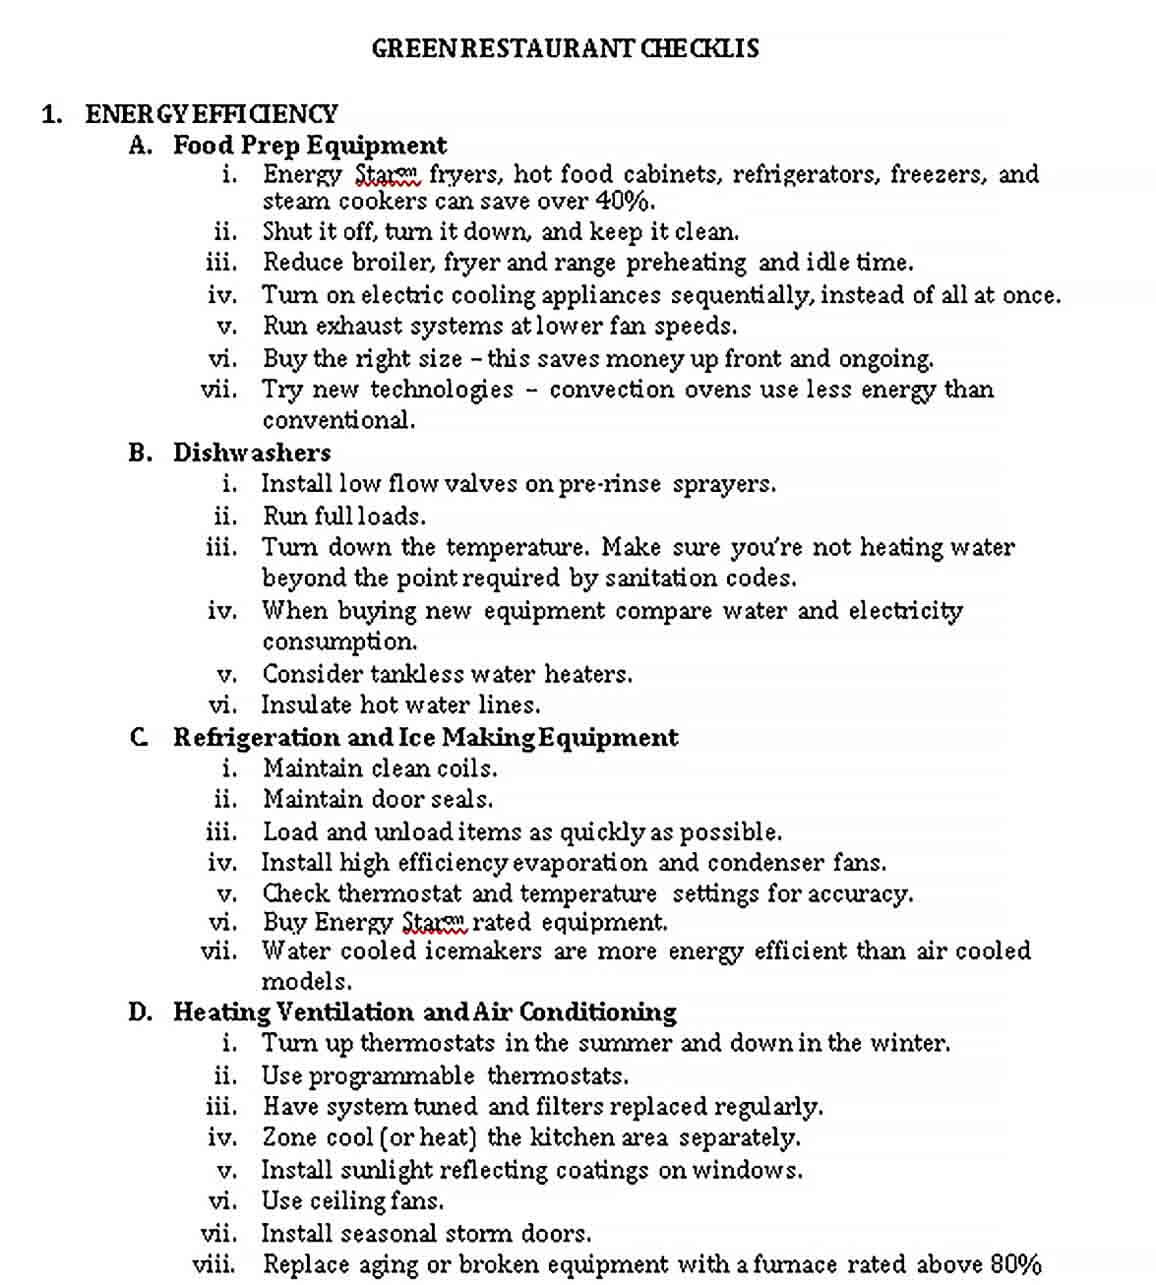 Sample Green Restaurant Checklist